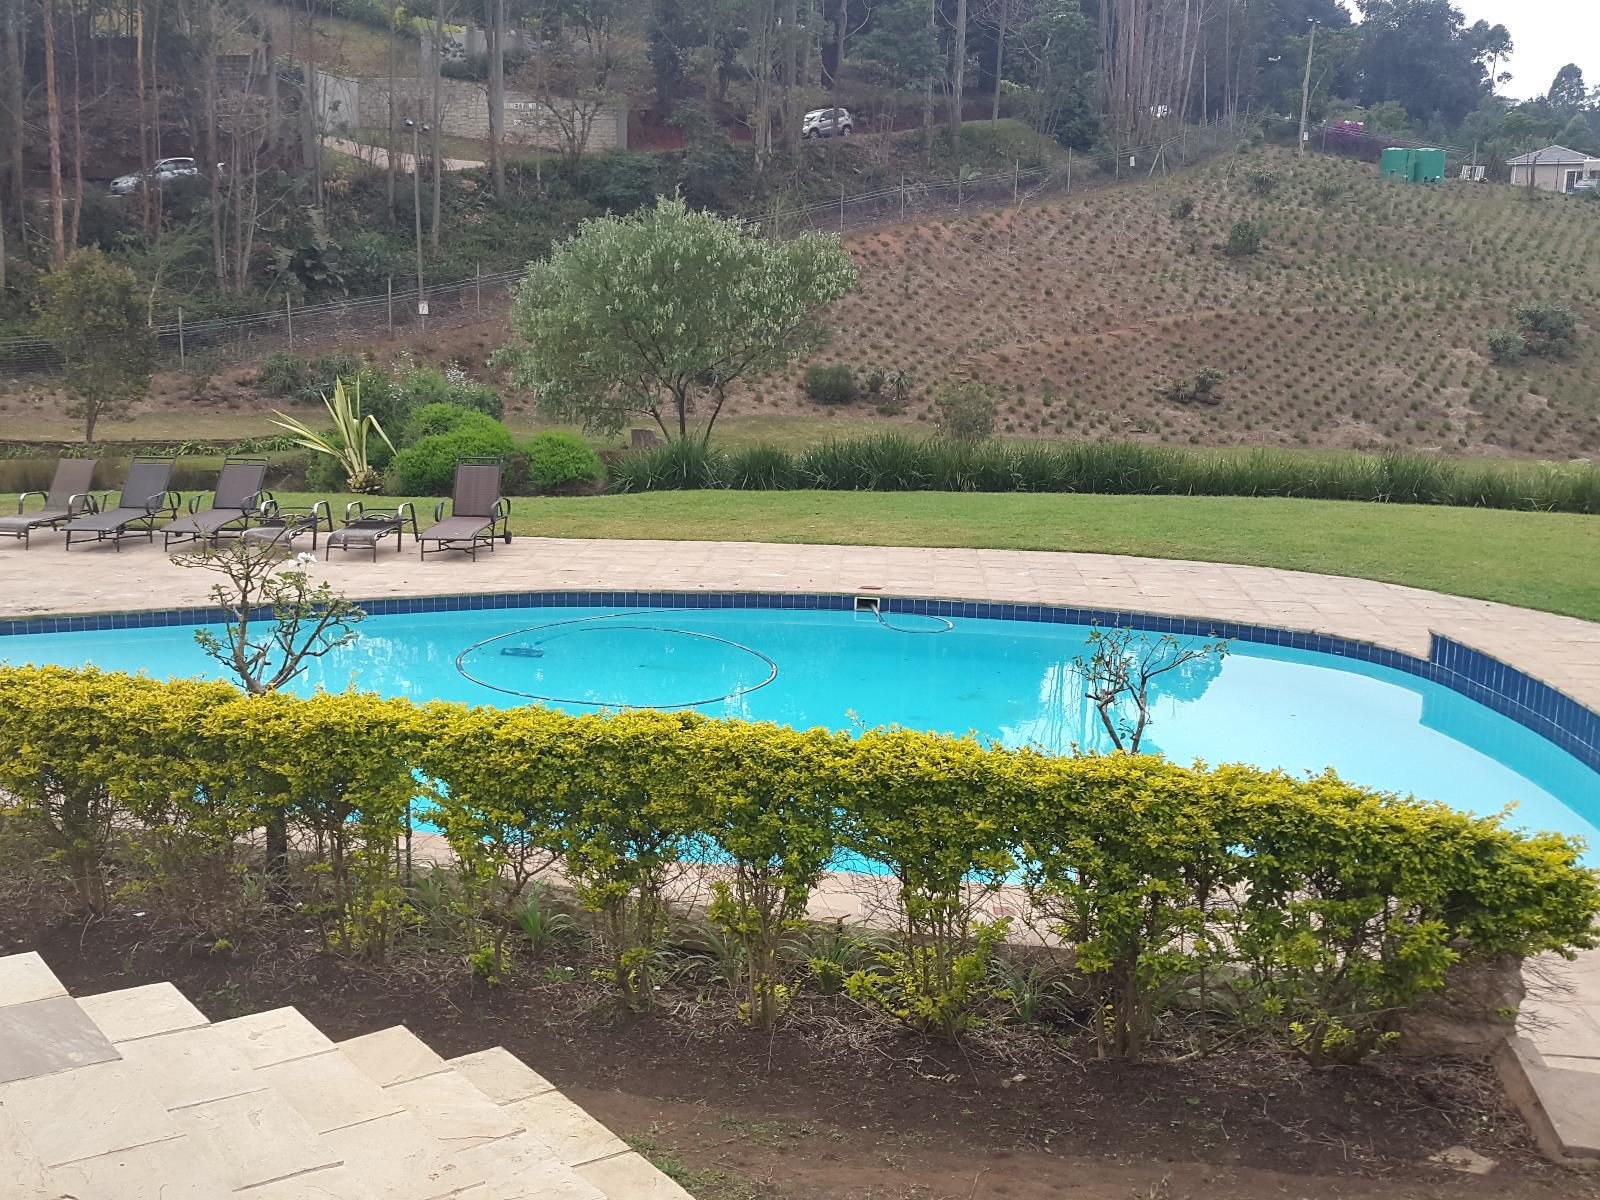 Springside House Hillcrest Durban Kwazulu Natal South Africa Garden, Nature, Plant, Swimming Pool